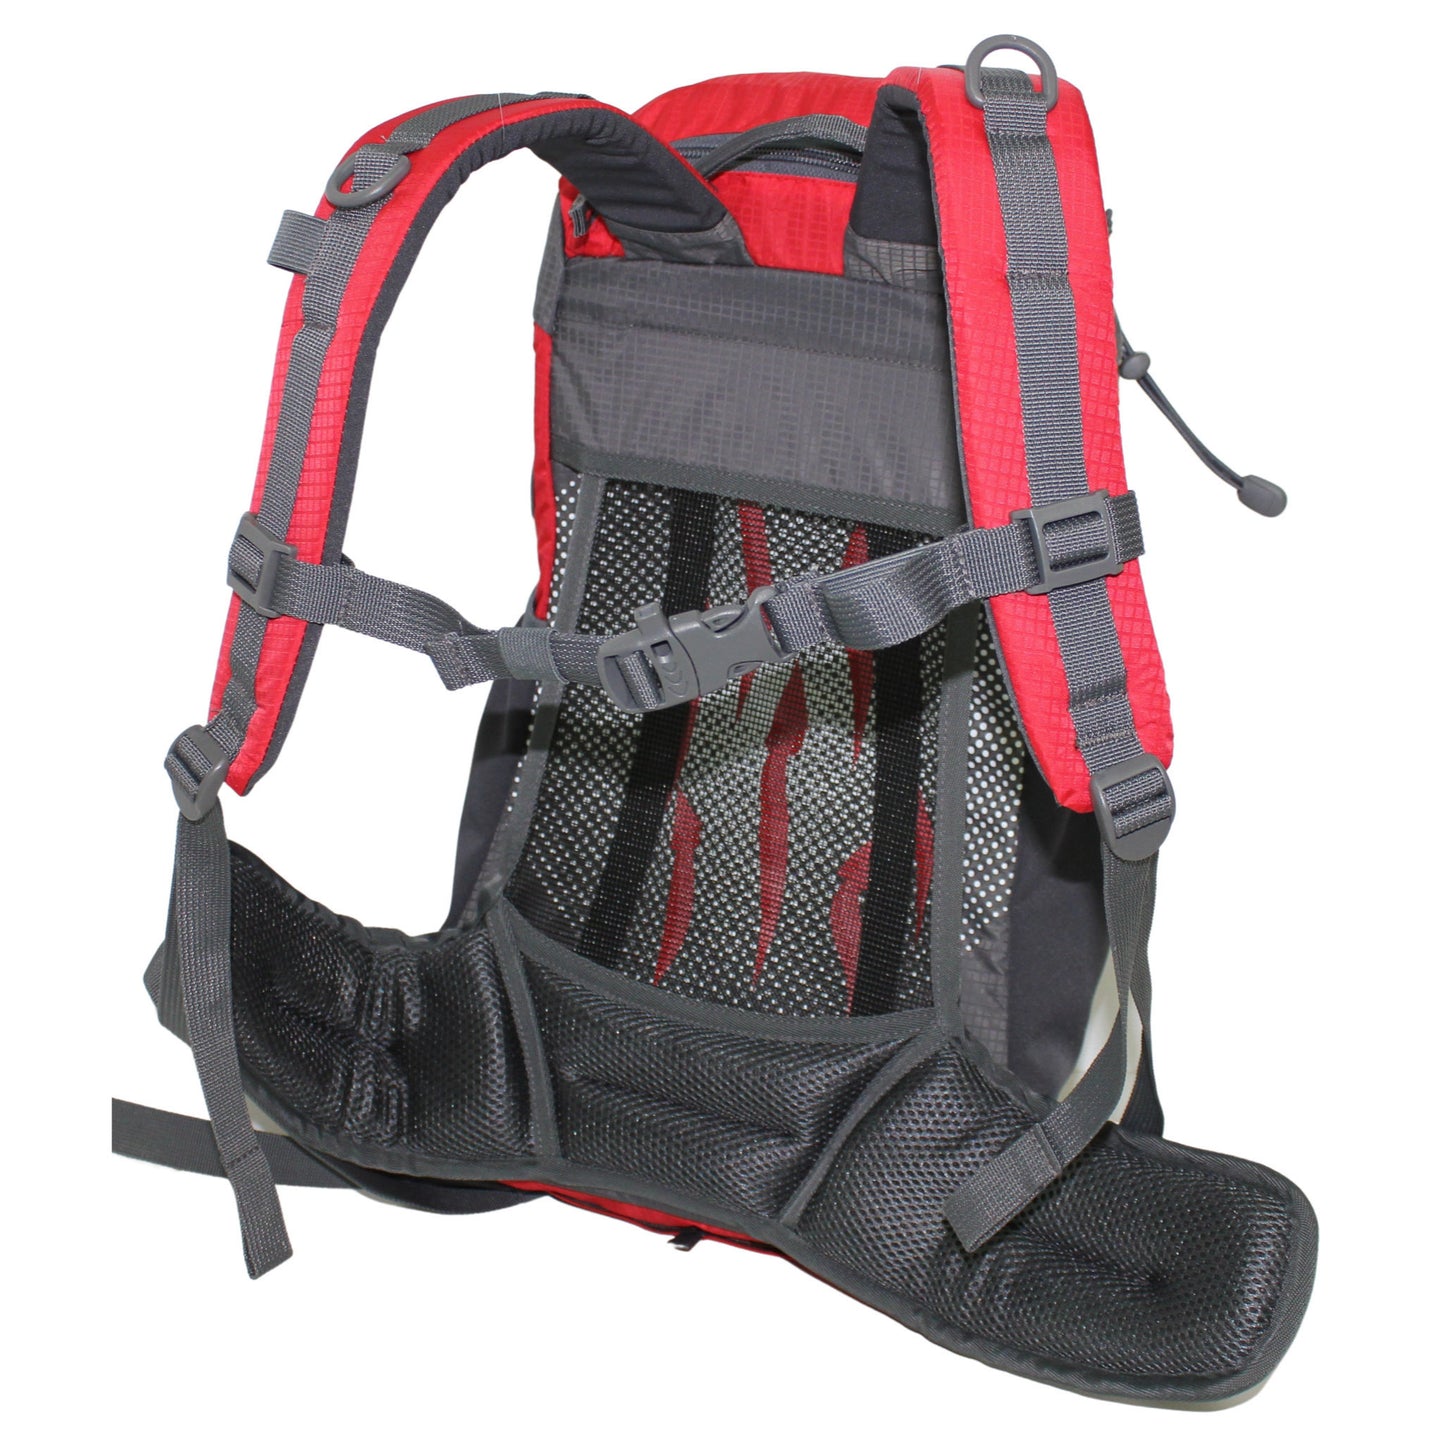 RU30 Lightweight hiking backpack 18 l red